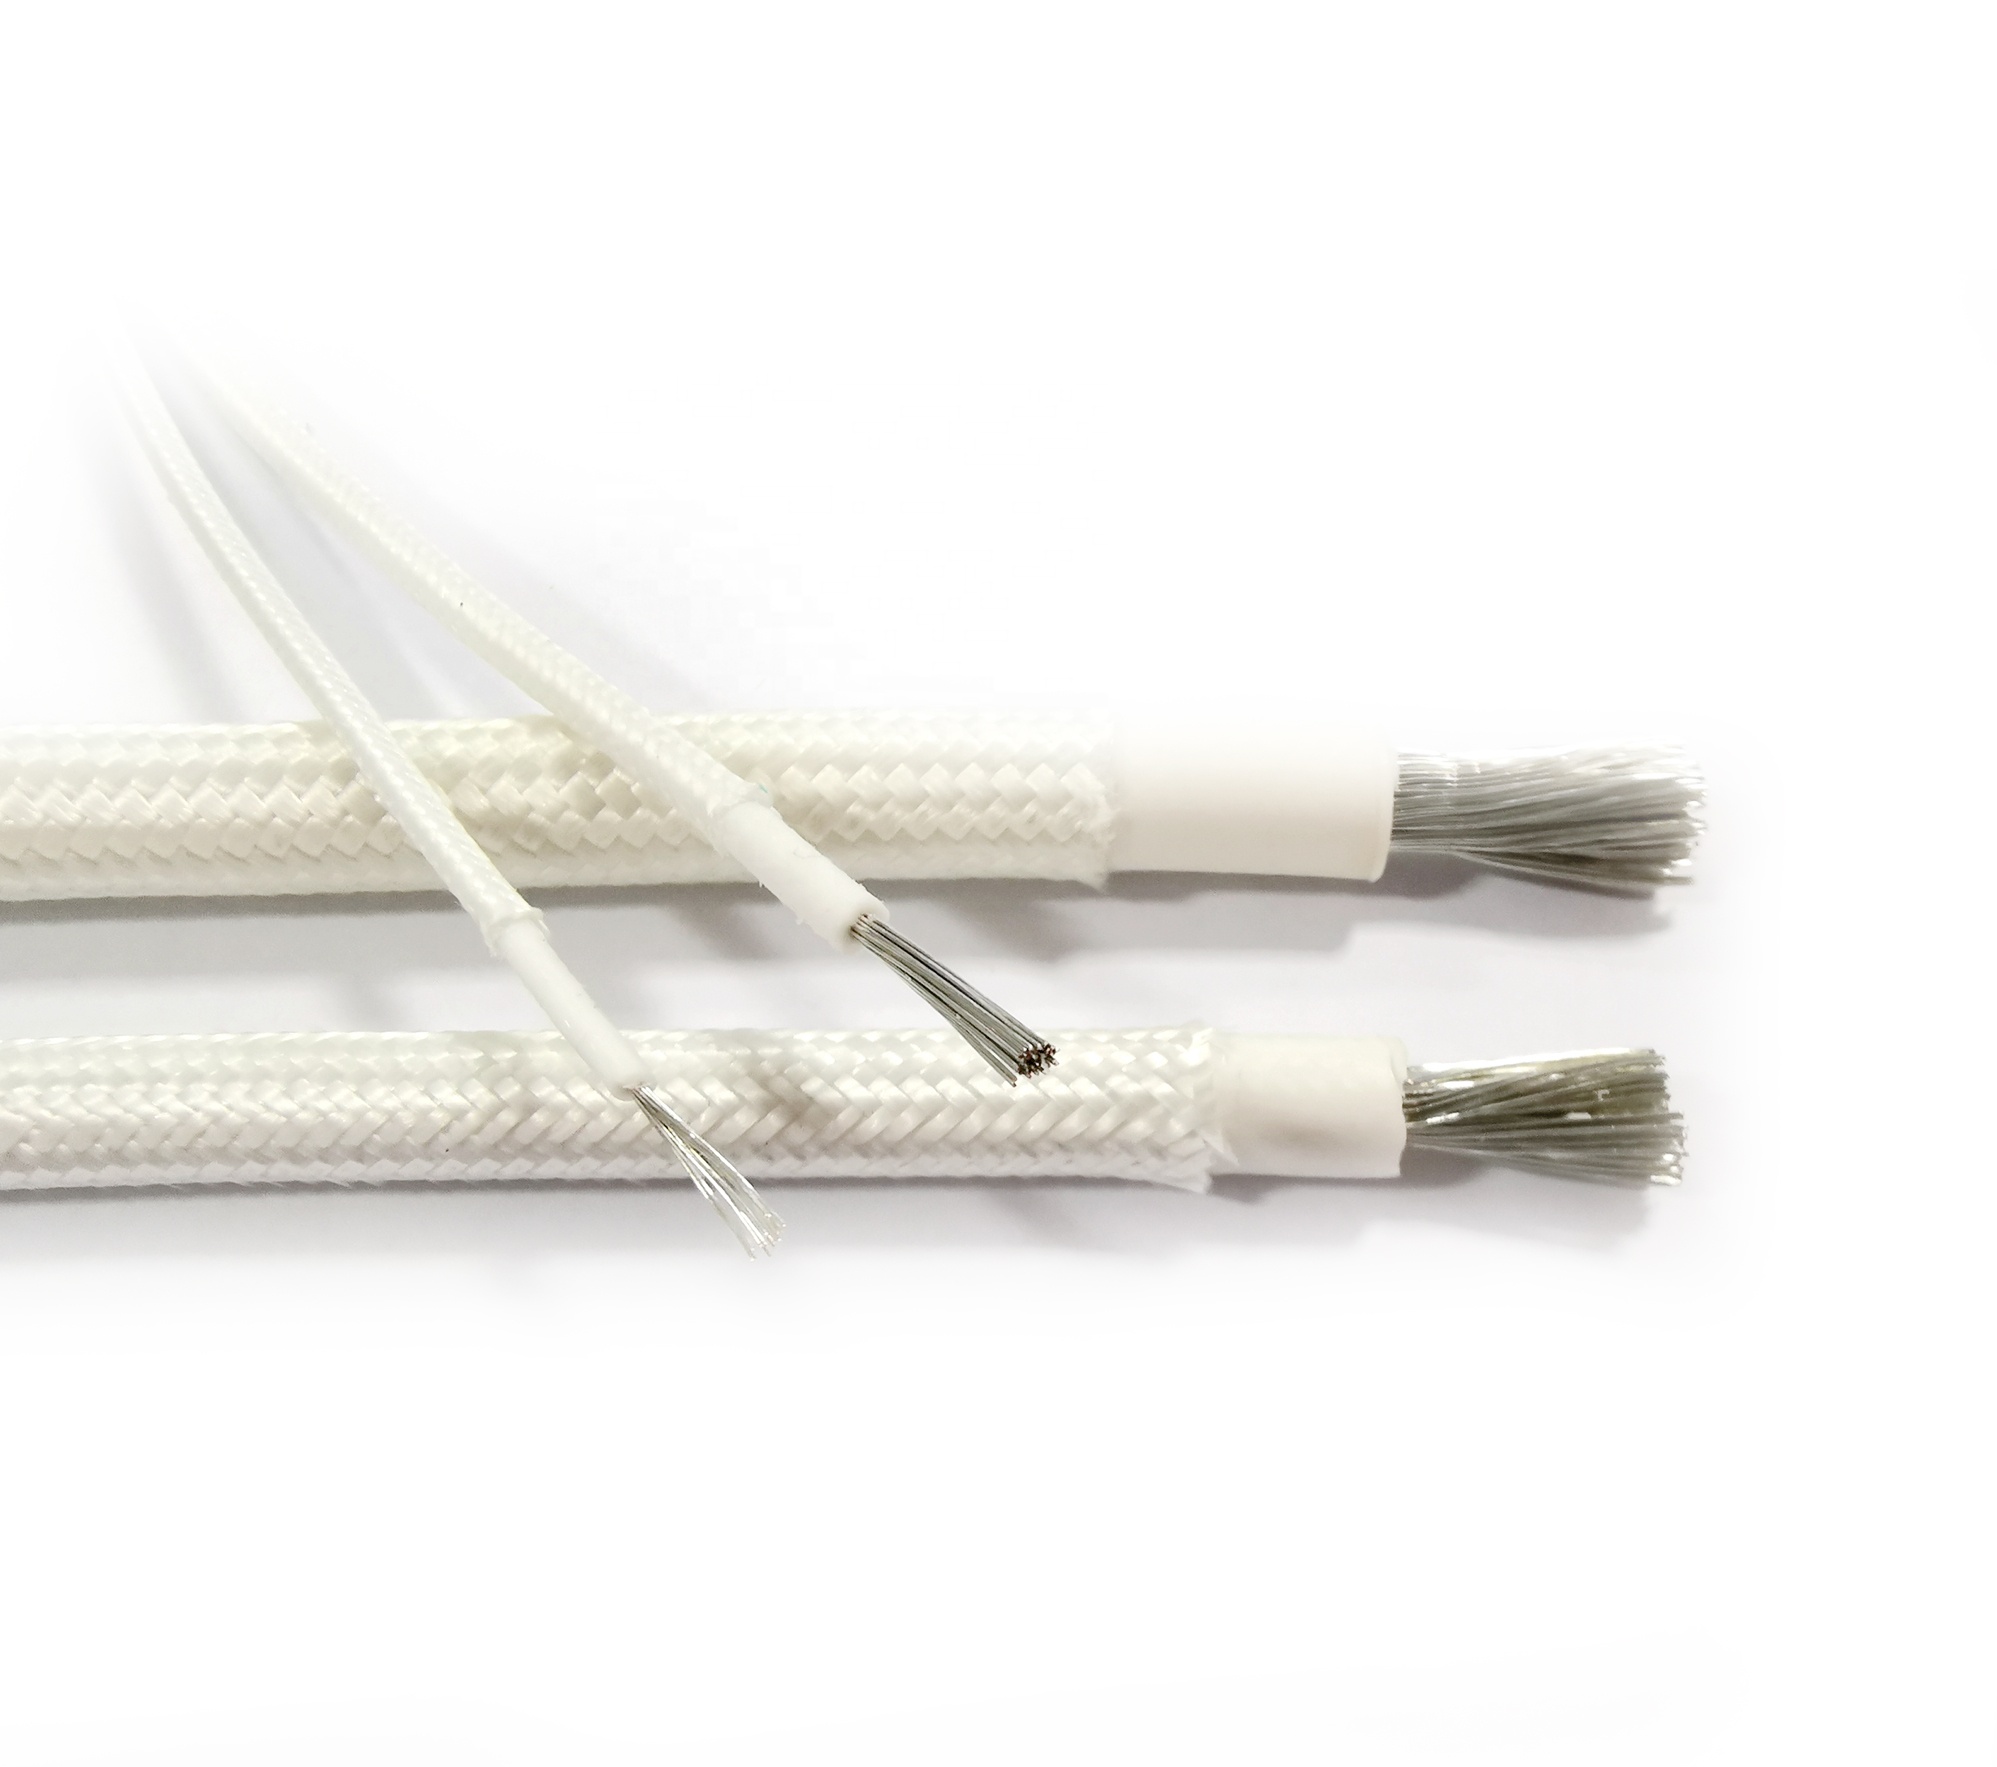 YG Fiberglass Braided Silicon Heating Wire flexible braid textile single core 3 core high temperature 200C silicone rubber cable